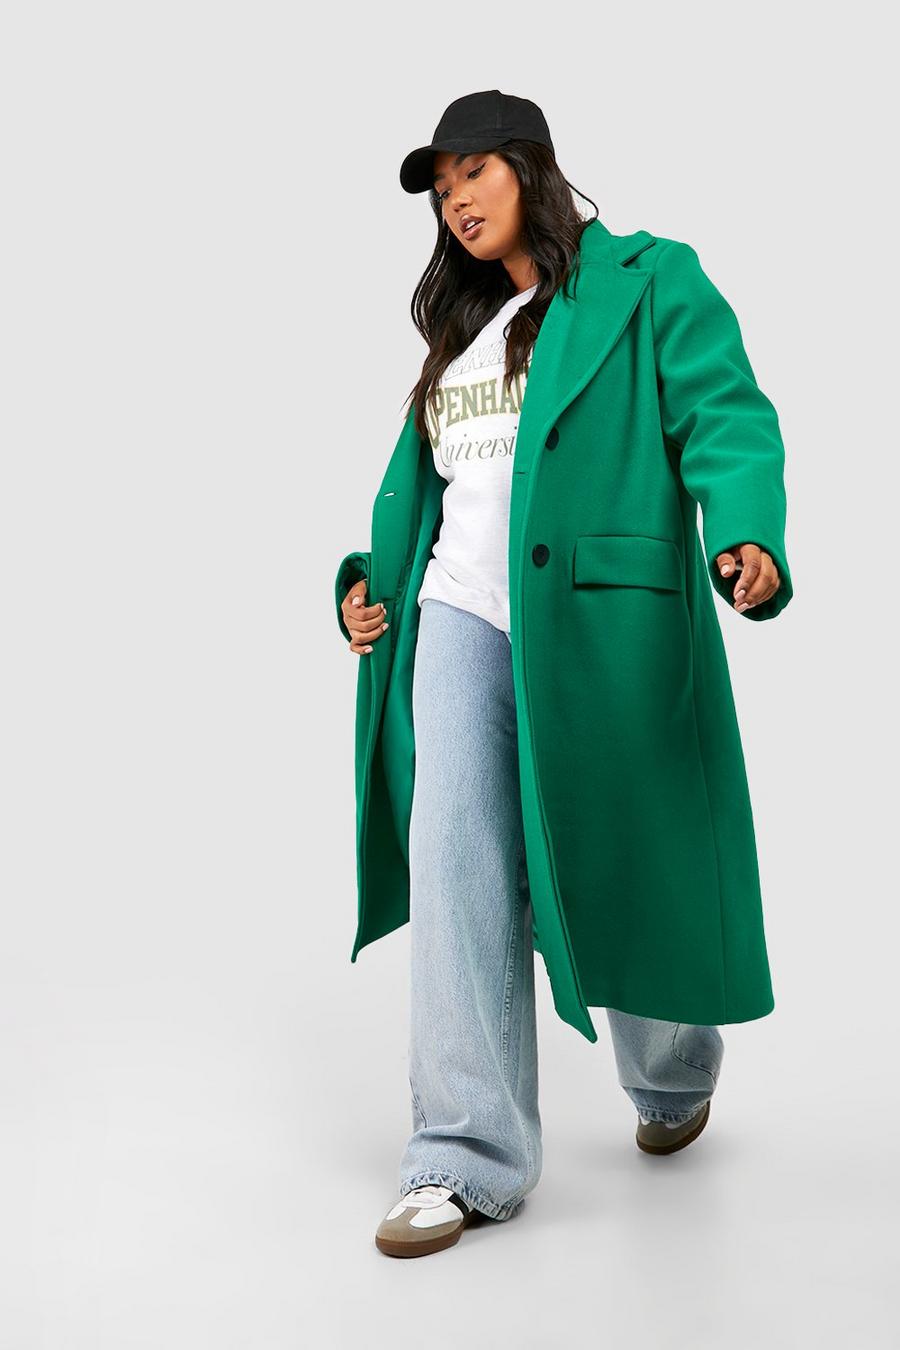 VREWARE plus size women's coats womens casual jacket warm womens jacket  cute green jacket trench coats for women fashion